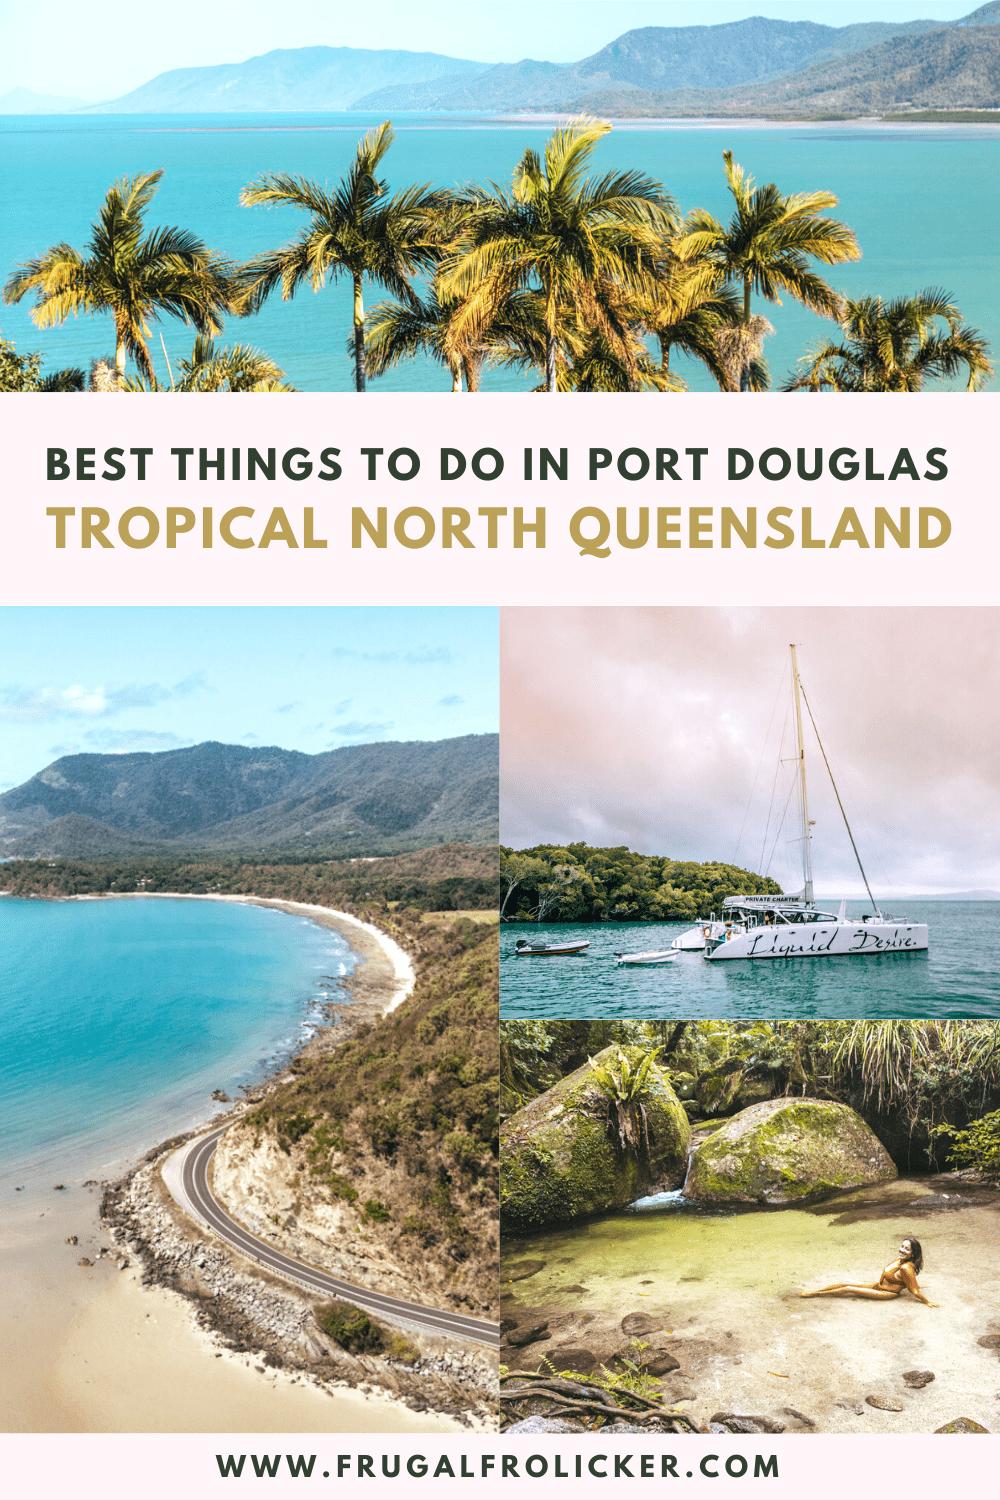 Best Things To Do - Port Douglas, Queensland, Australia